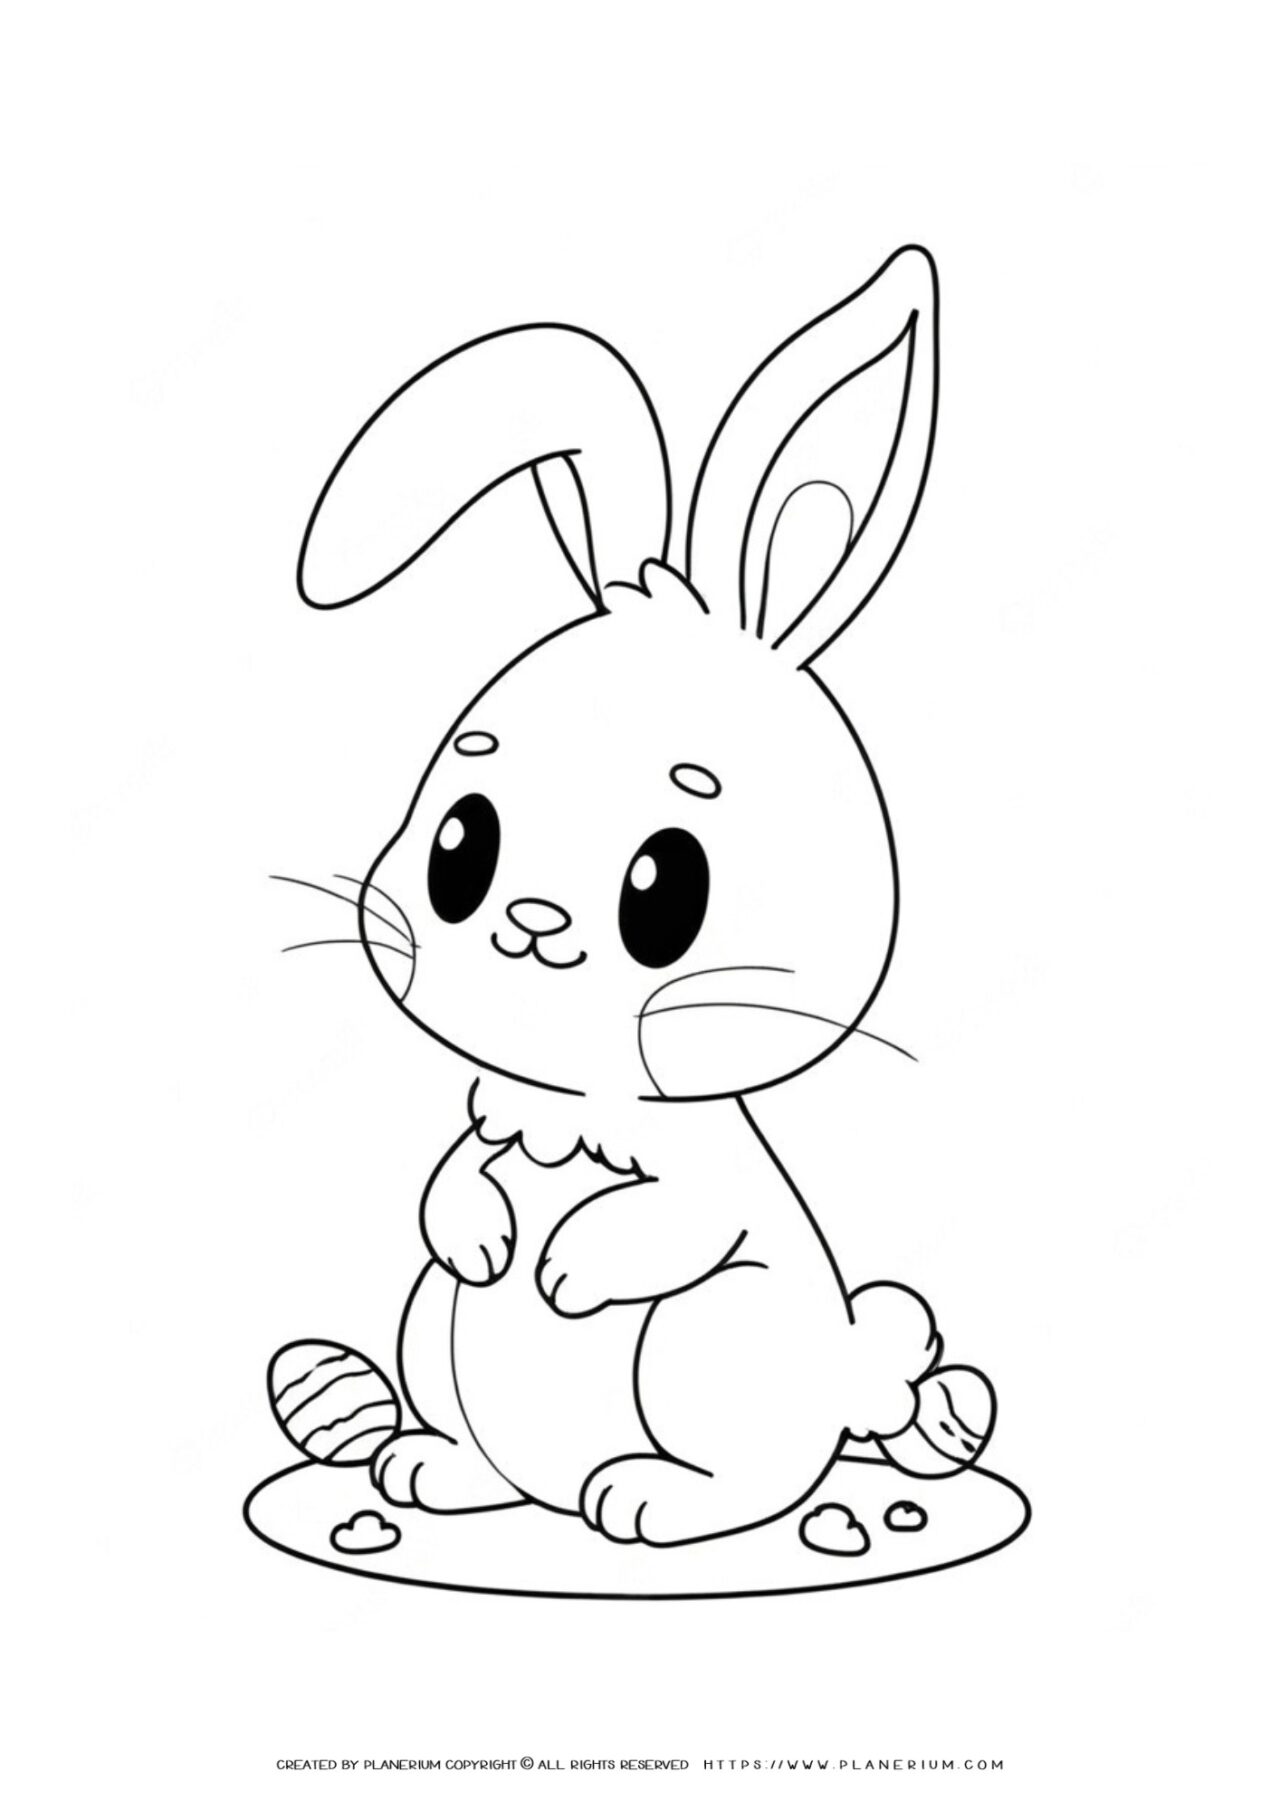 Cartoon rabbit coloring page illustration.